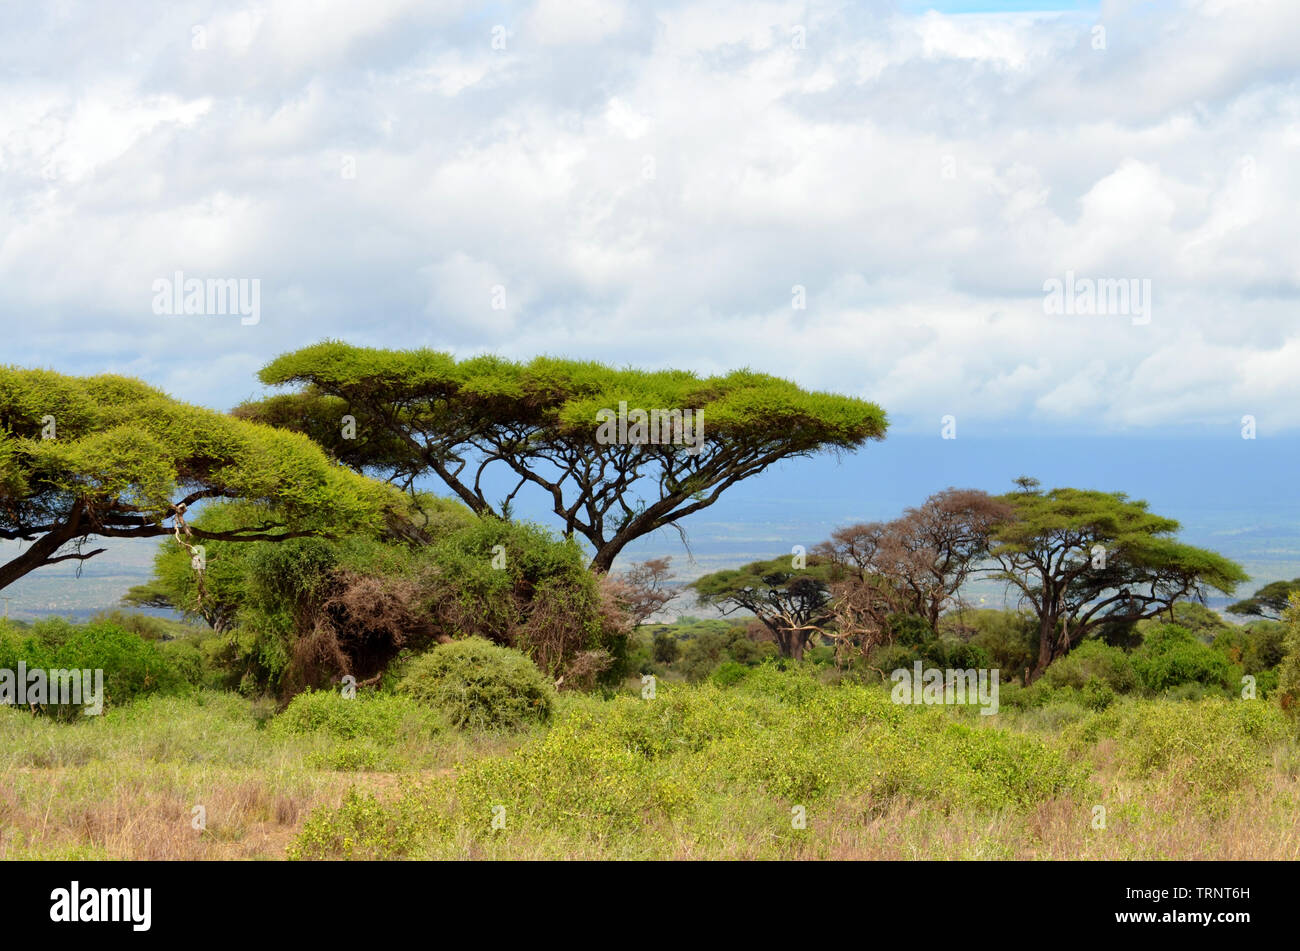 Kenia Safari Afrika Acai Bäume Amboseli Tsavo West Landschaft Stockfoto